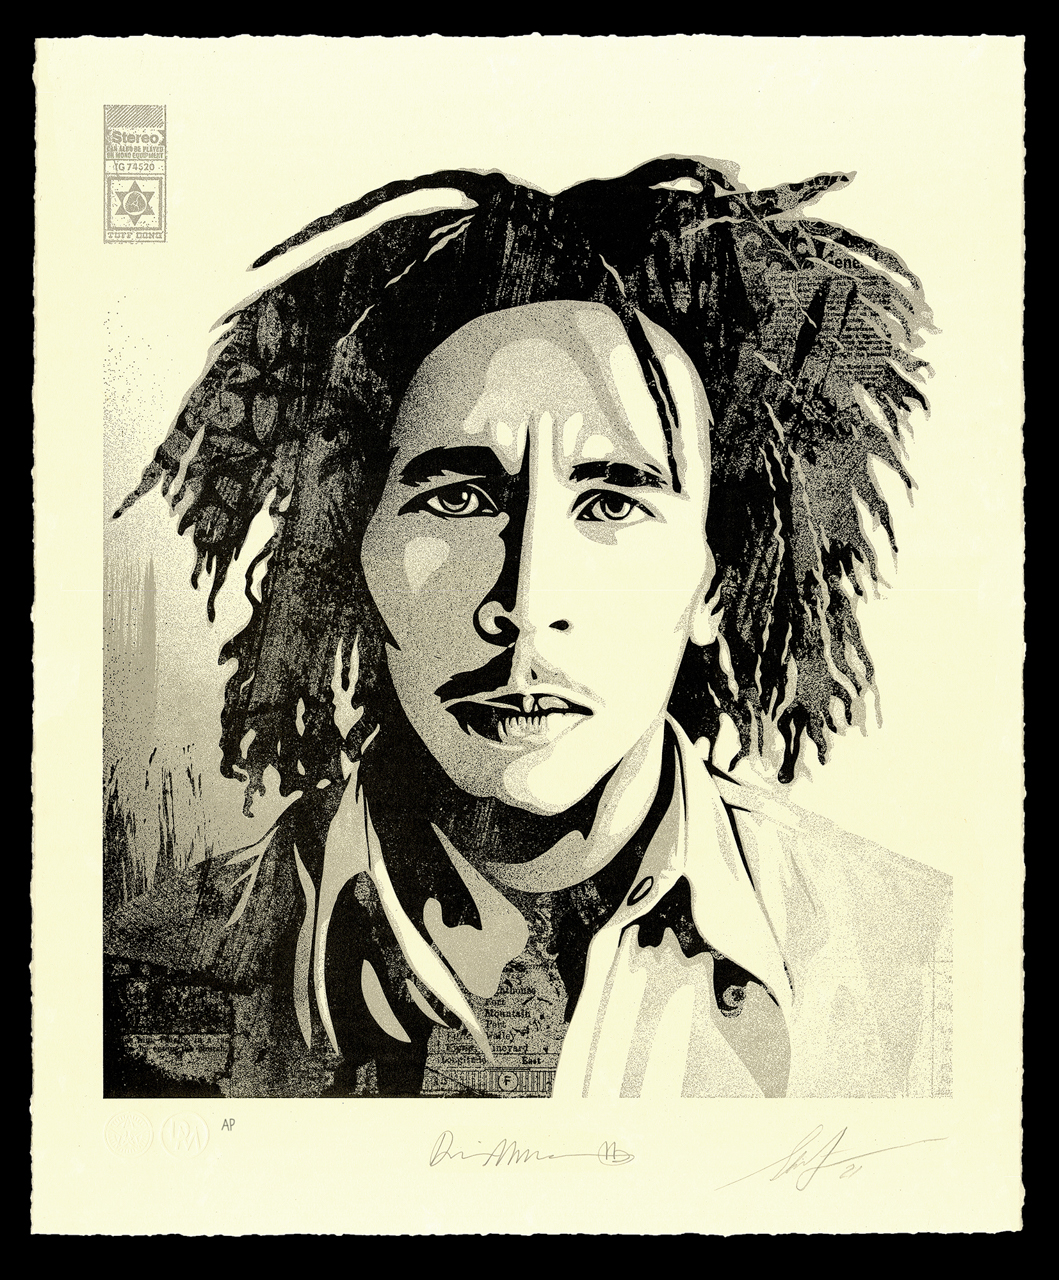 Bob Marley 40th Letterpress - "Confrontation" - 16 x 19.5 inches